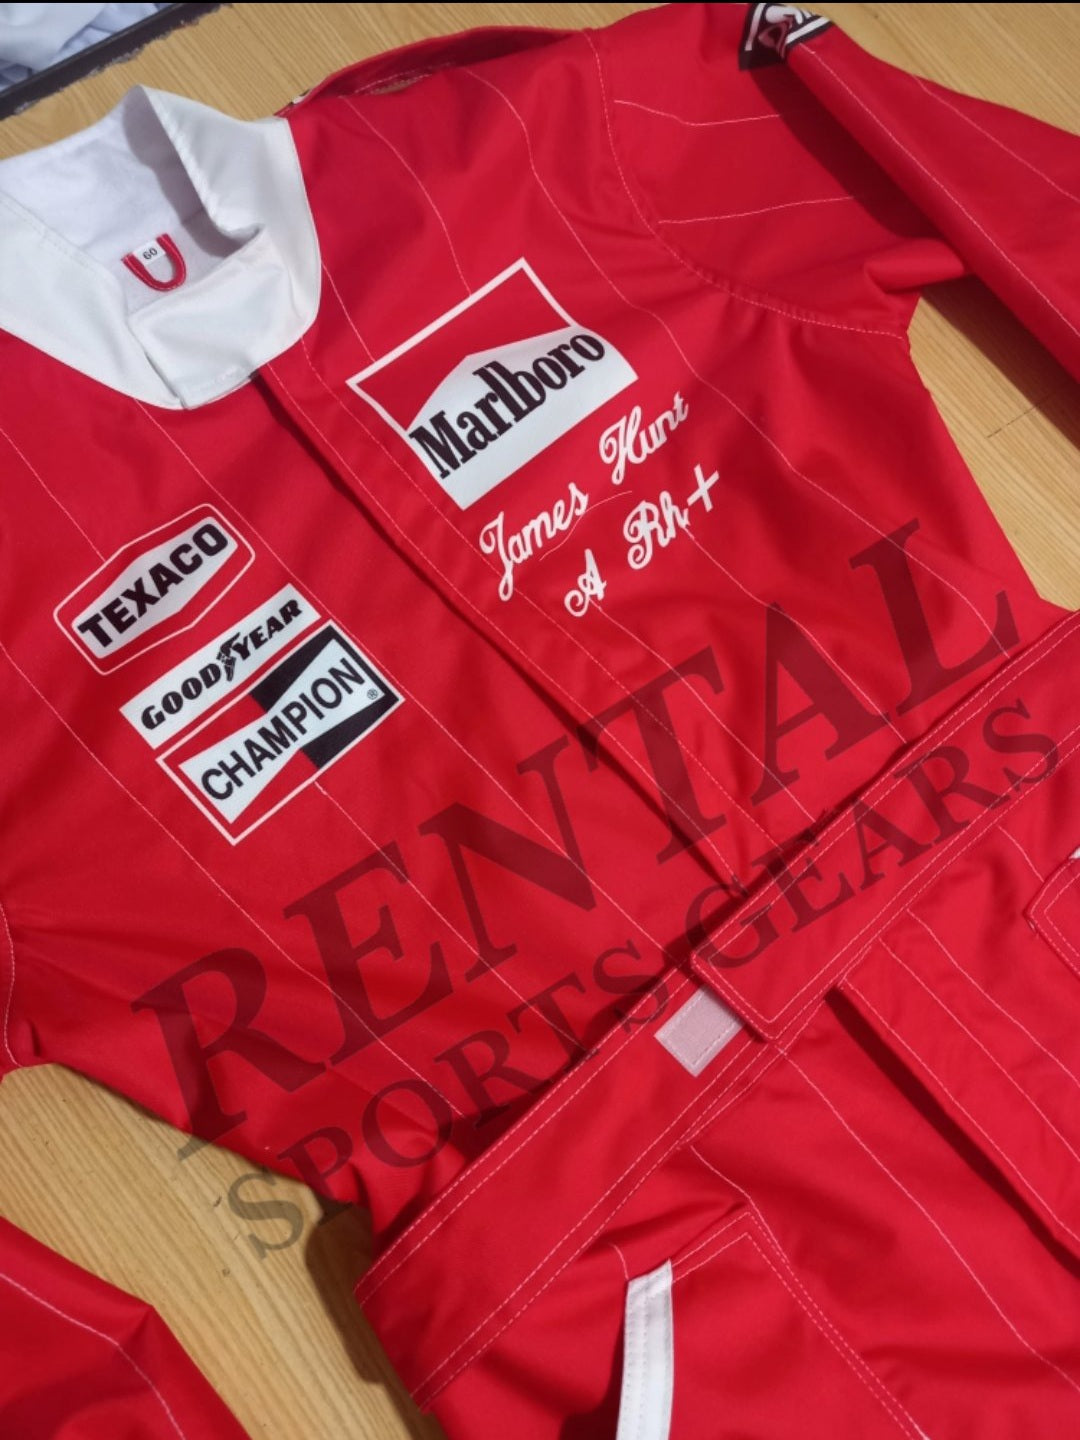 James Hunt RUSH Marlboro Race Suit F1 - F1 Replica Race Suit